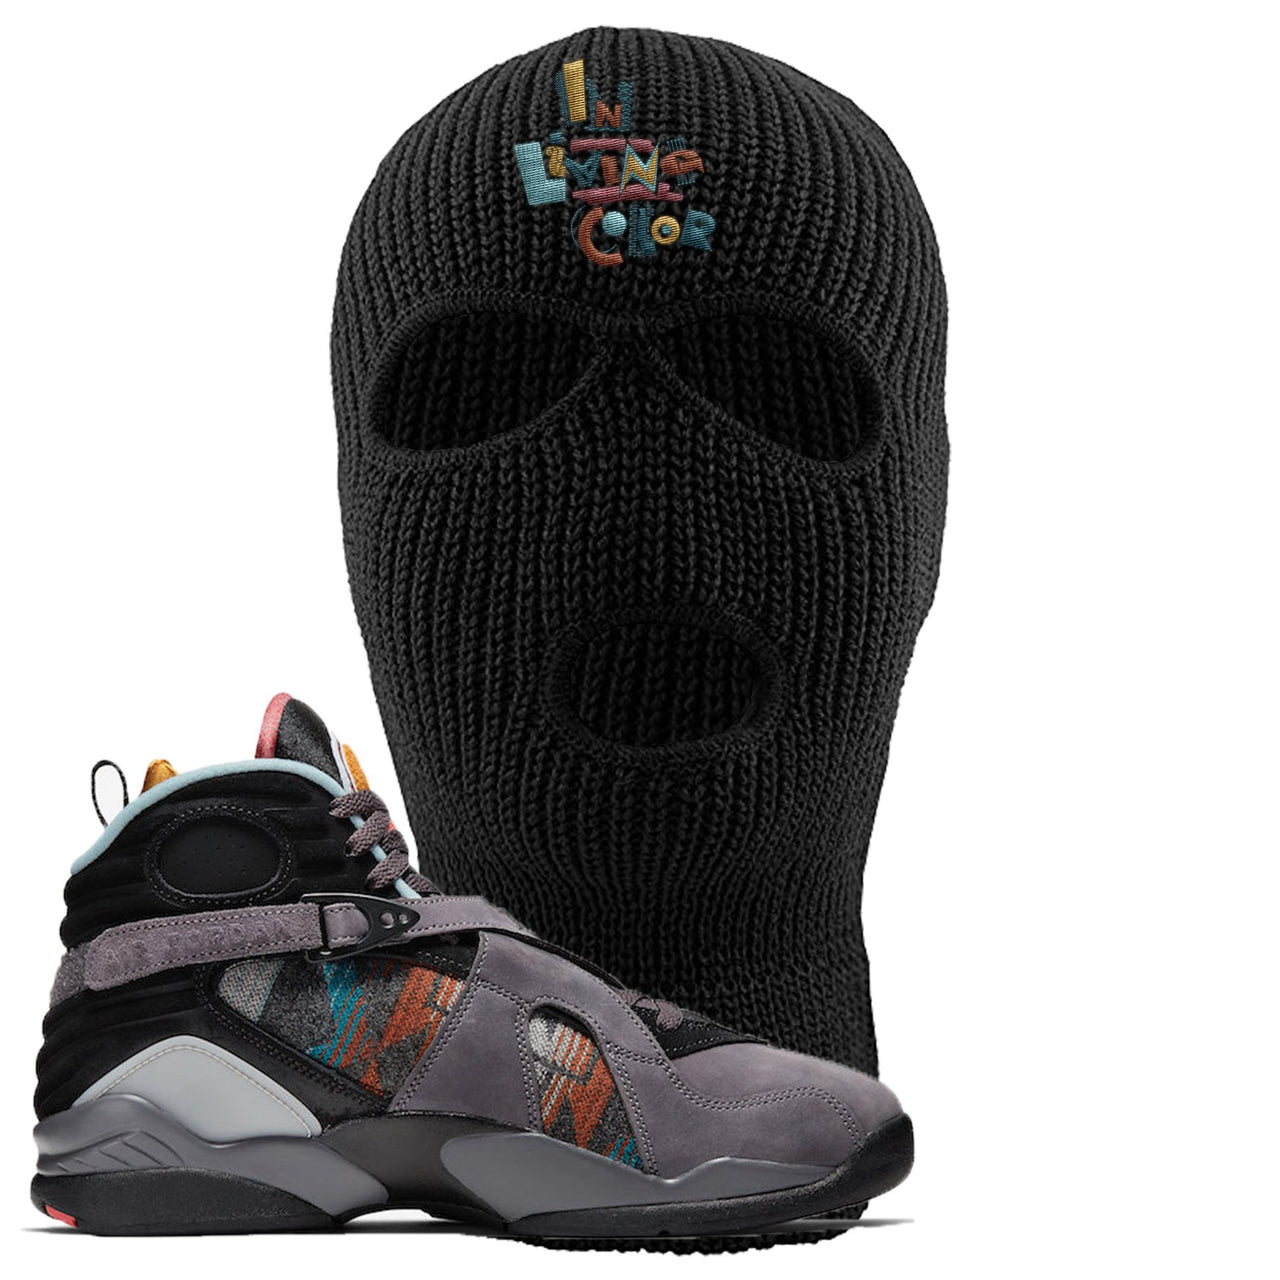 Jordan 8 N7 Pendleton In Living Color Black Sneaker Hook Up Ski Mask